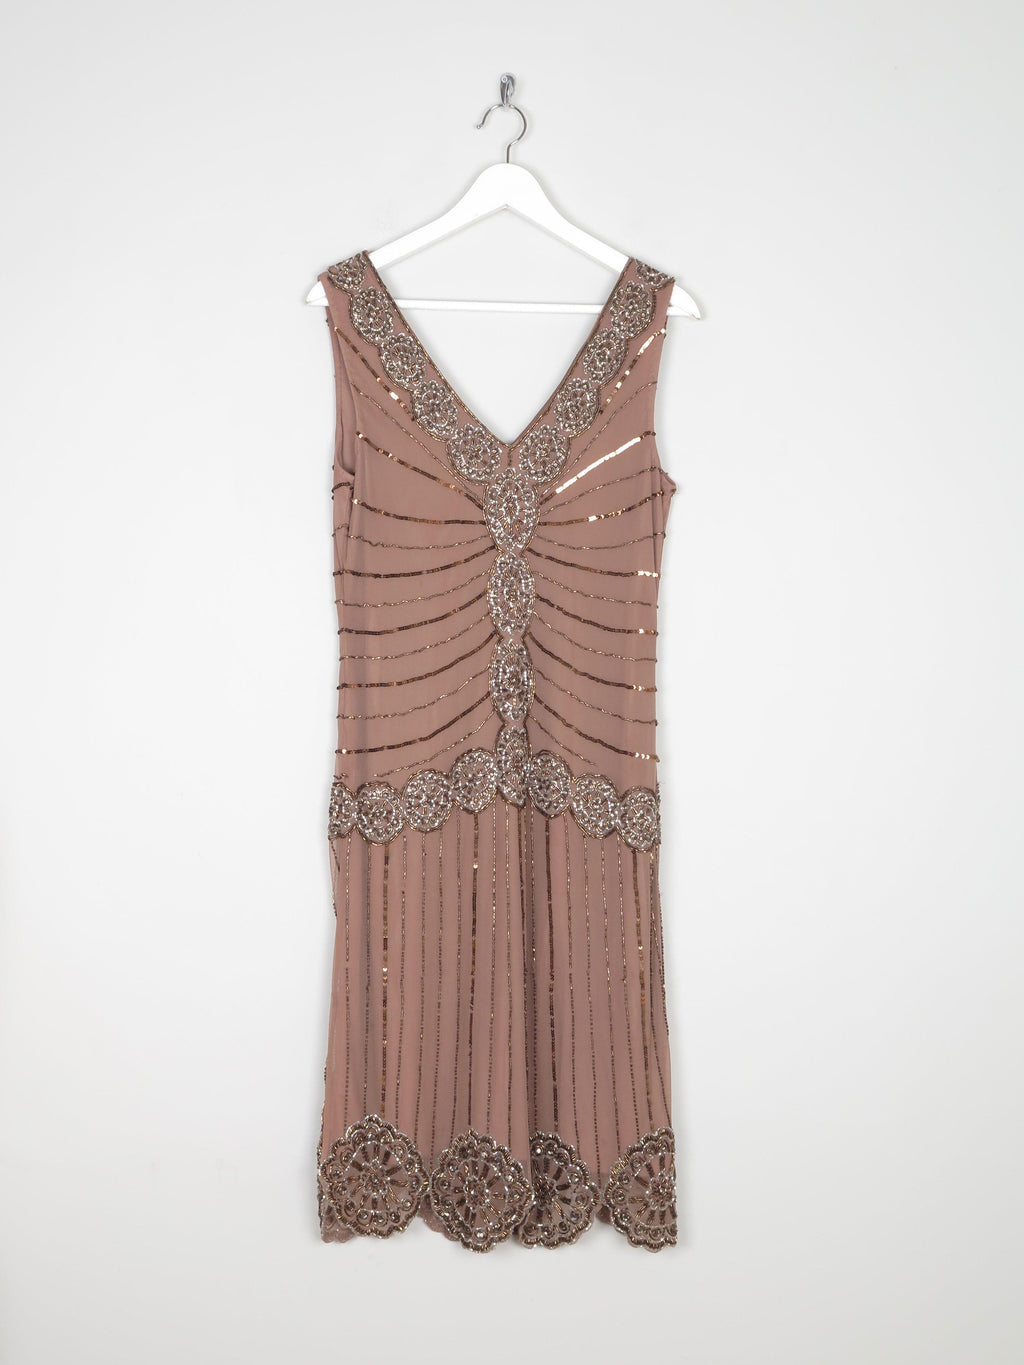 Mocha Beaded 1920s Flapper Style Dress L 14/16 - The Harlequin